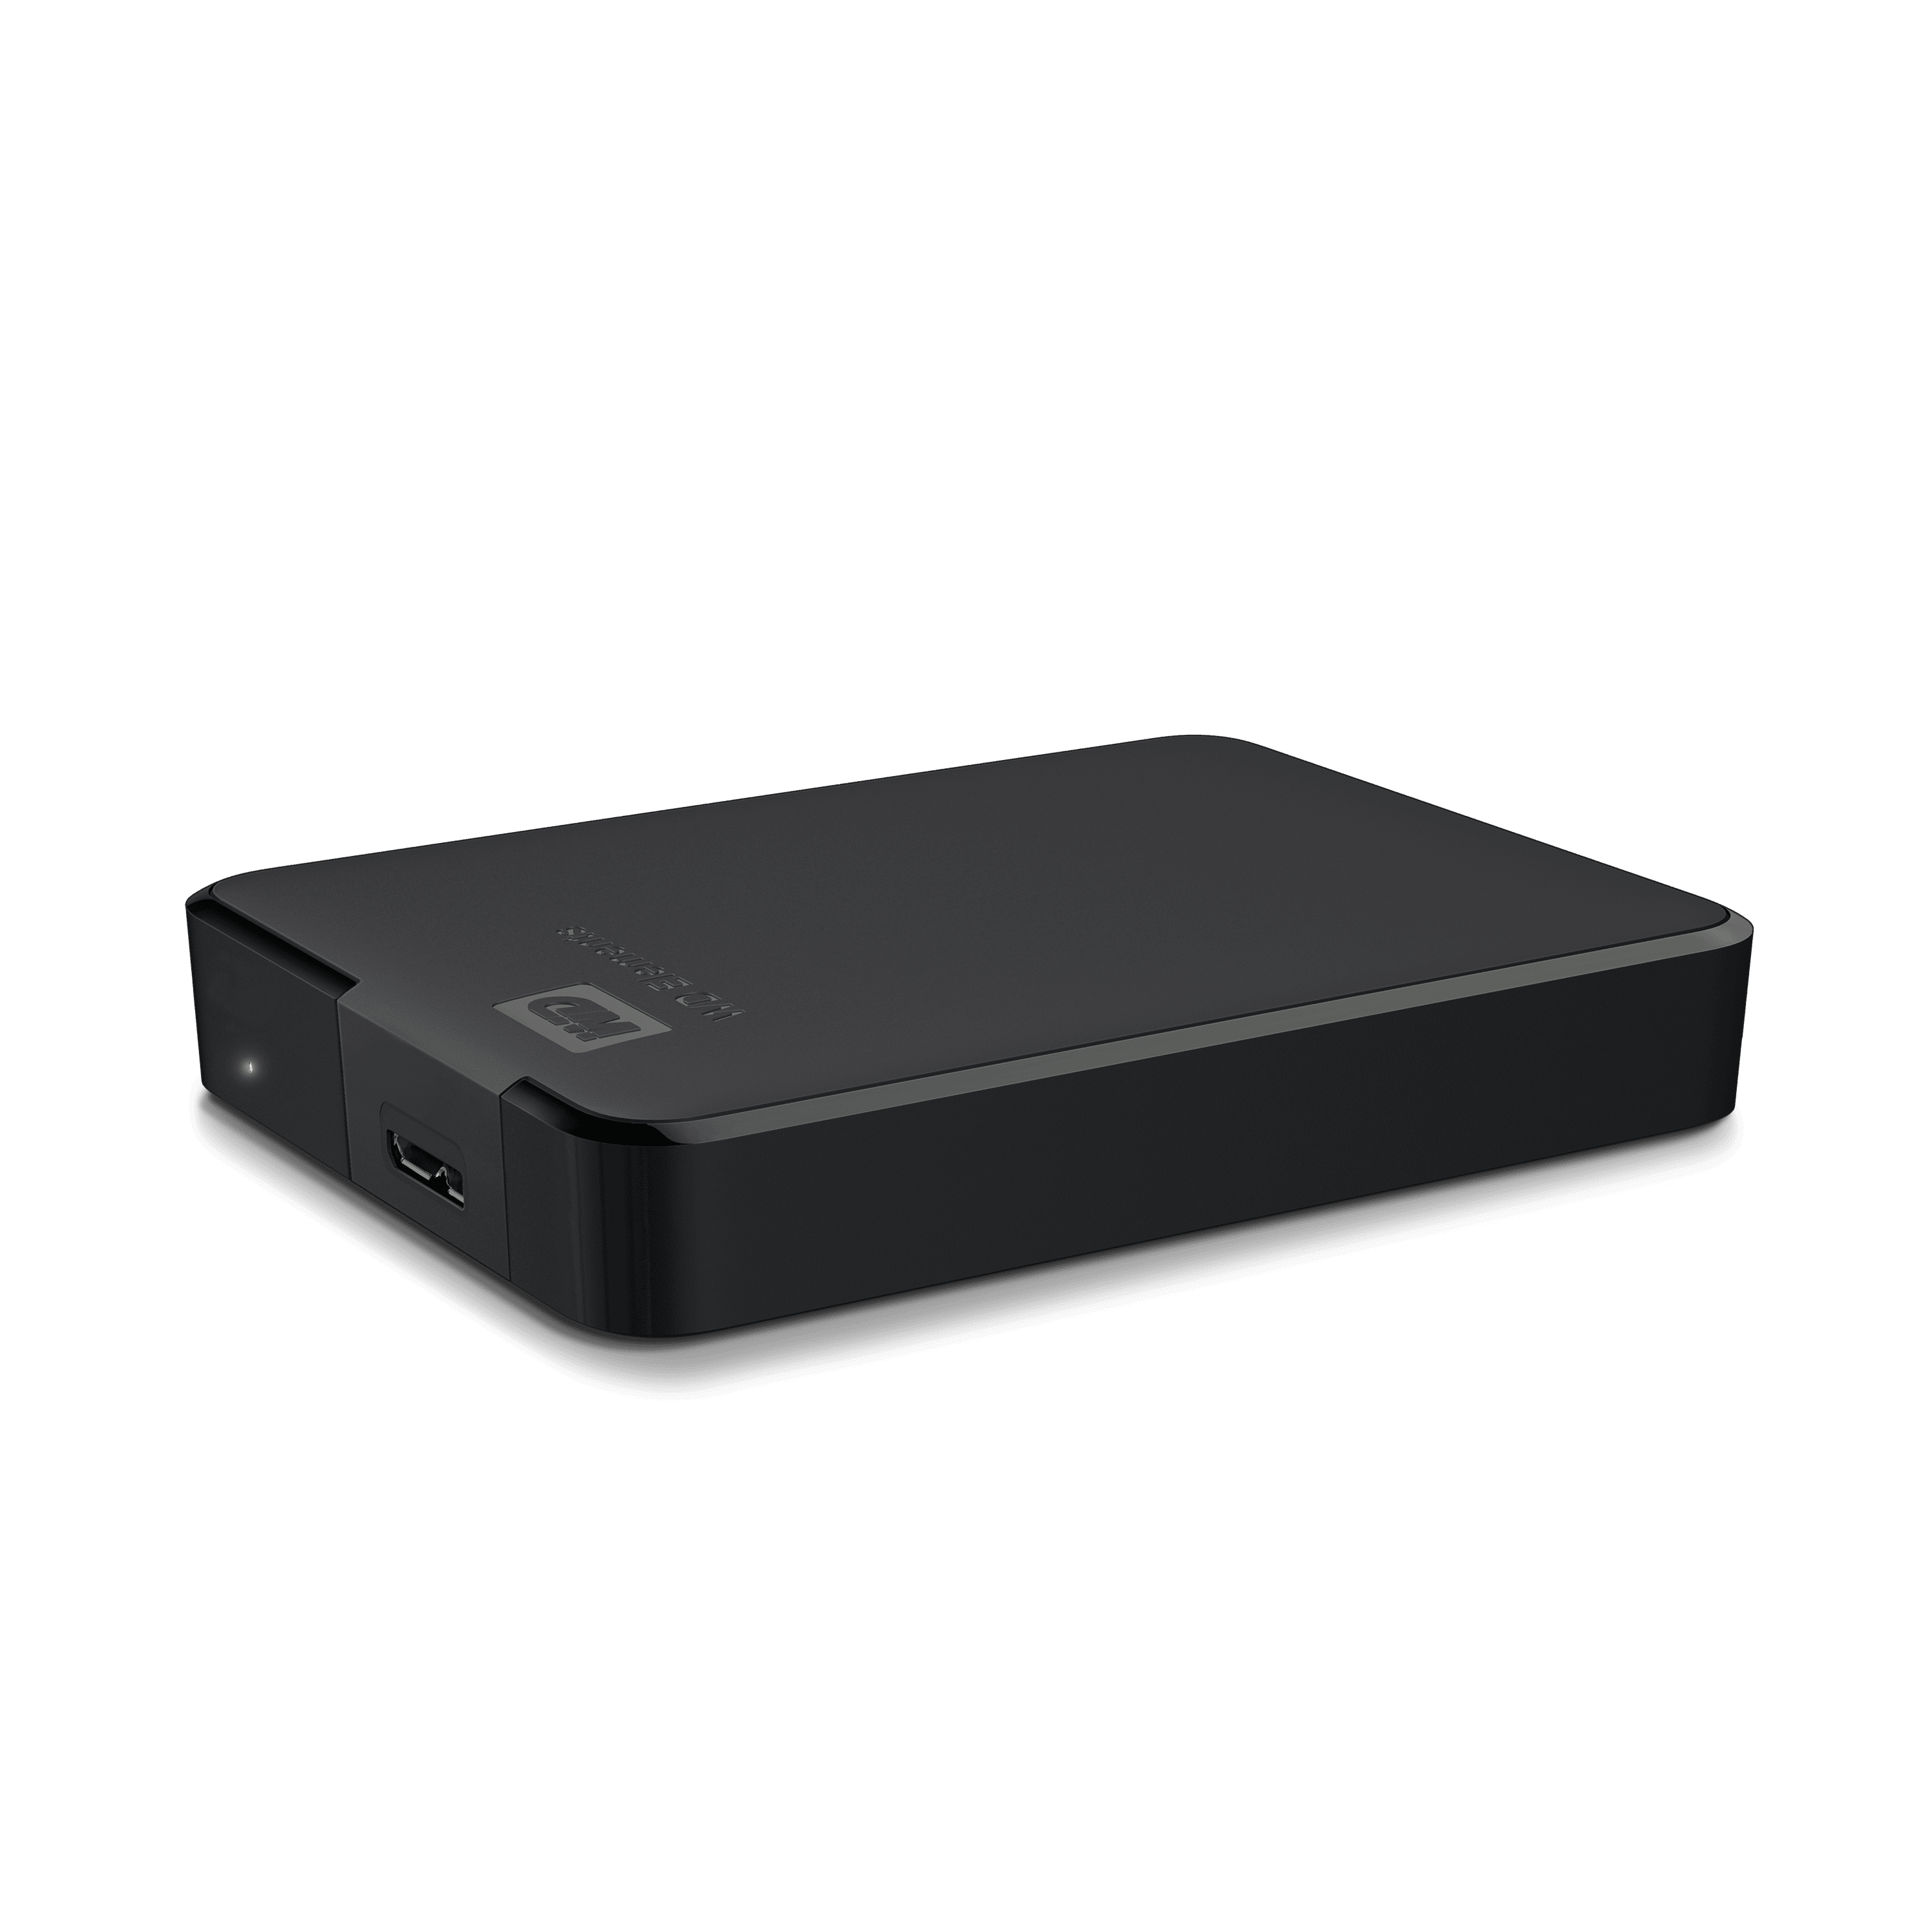 WD 1TB Elements Portable HDD, External Hard Drive, USB 3.0 for PC & Mac,  Plug and Play Ready - WDBUZG0010BBK-WESN, Black